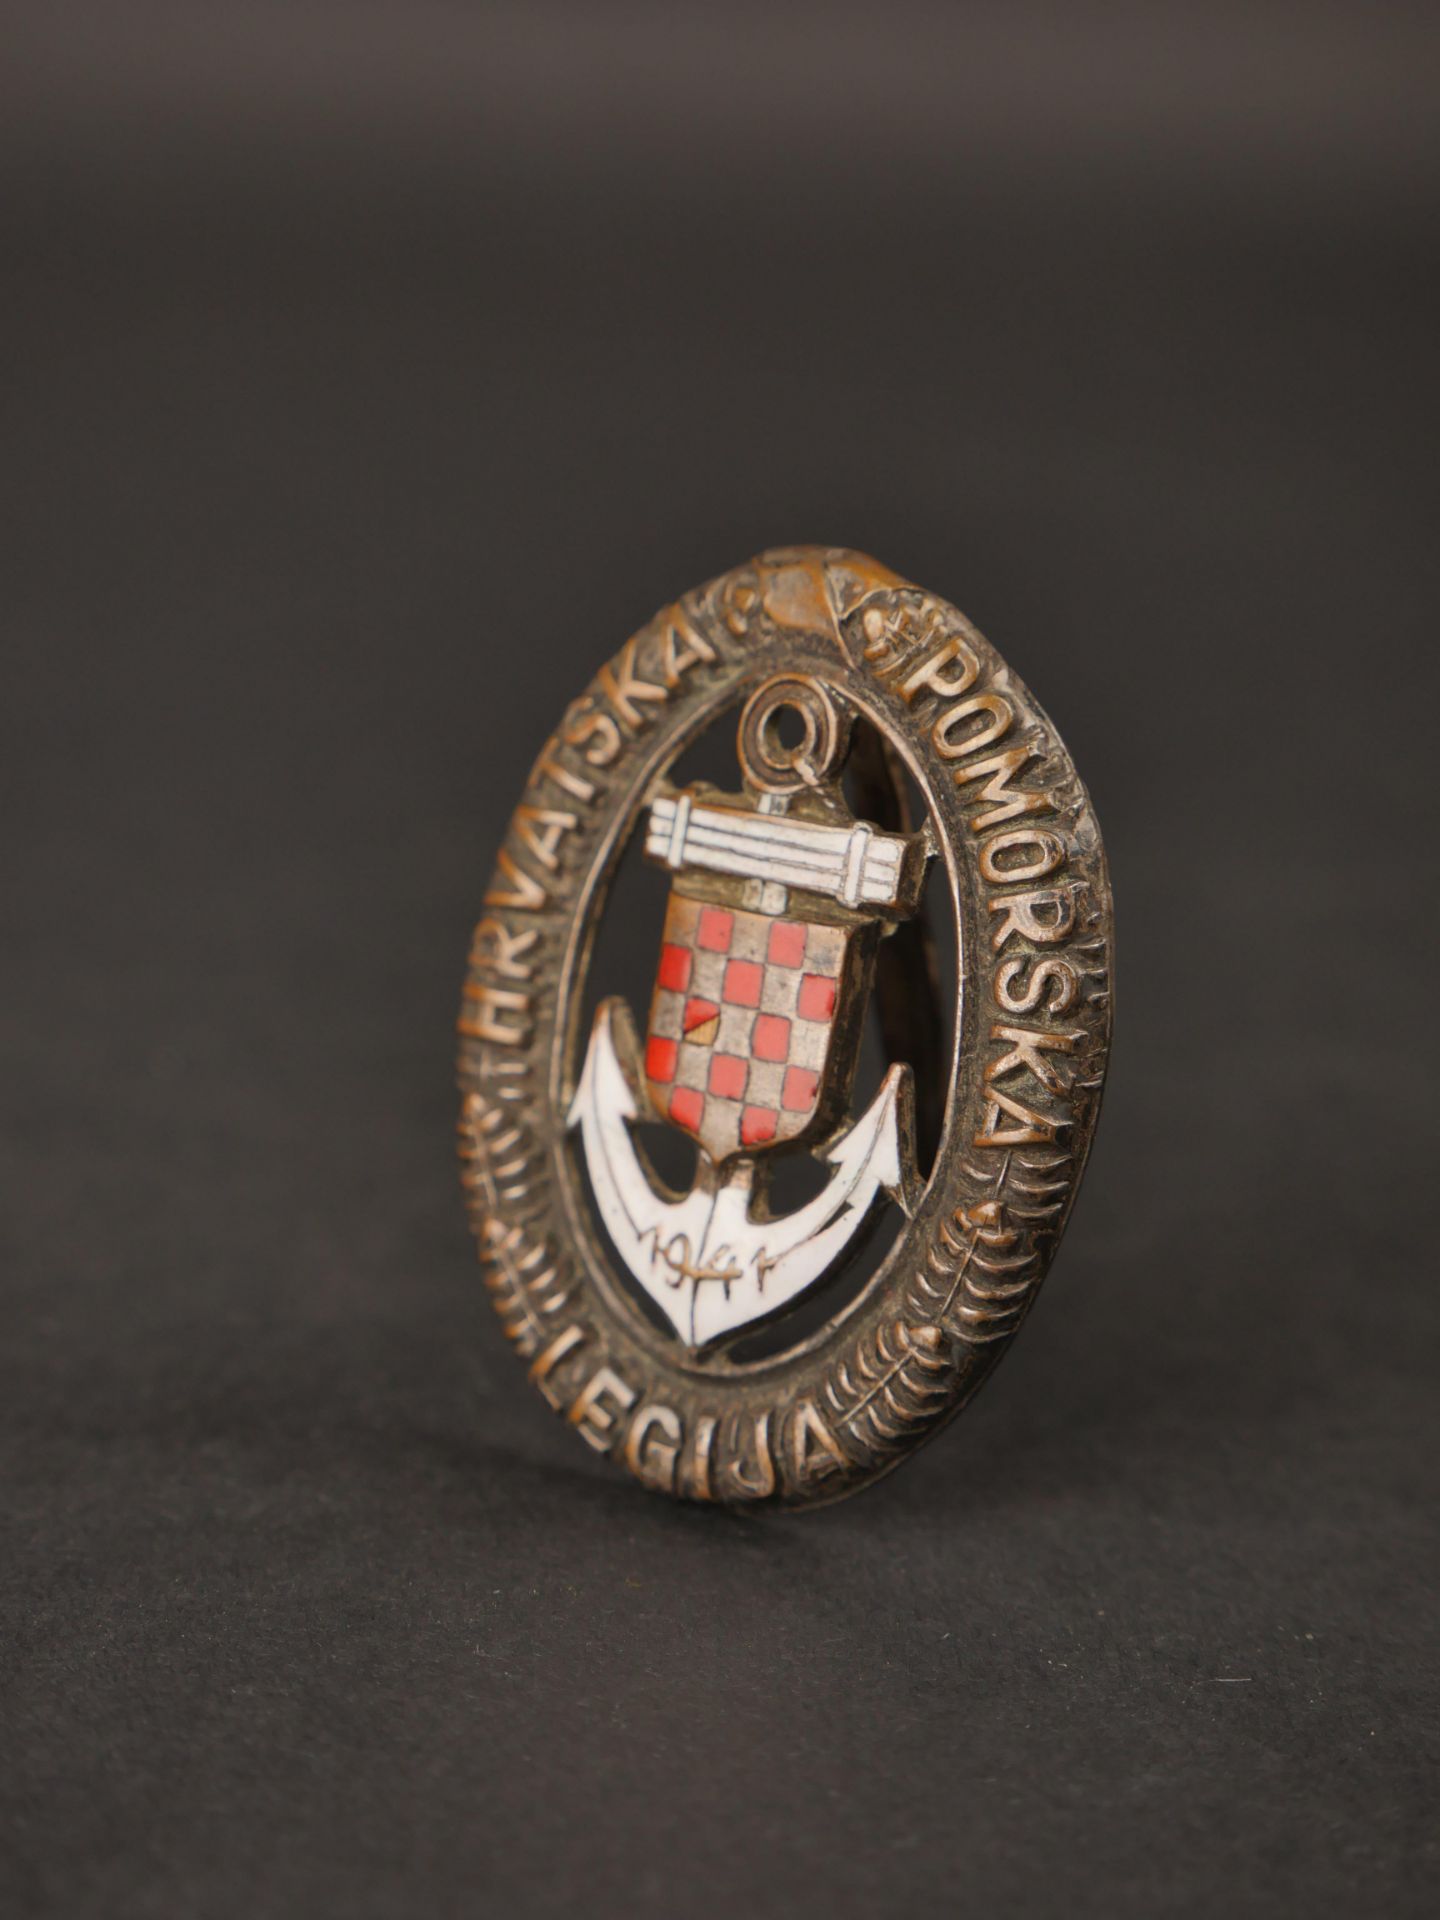 Badge de la legion navale croate.Badge of the Croatian Naval Legion.